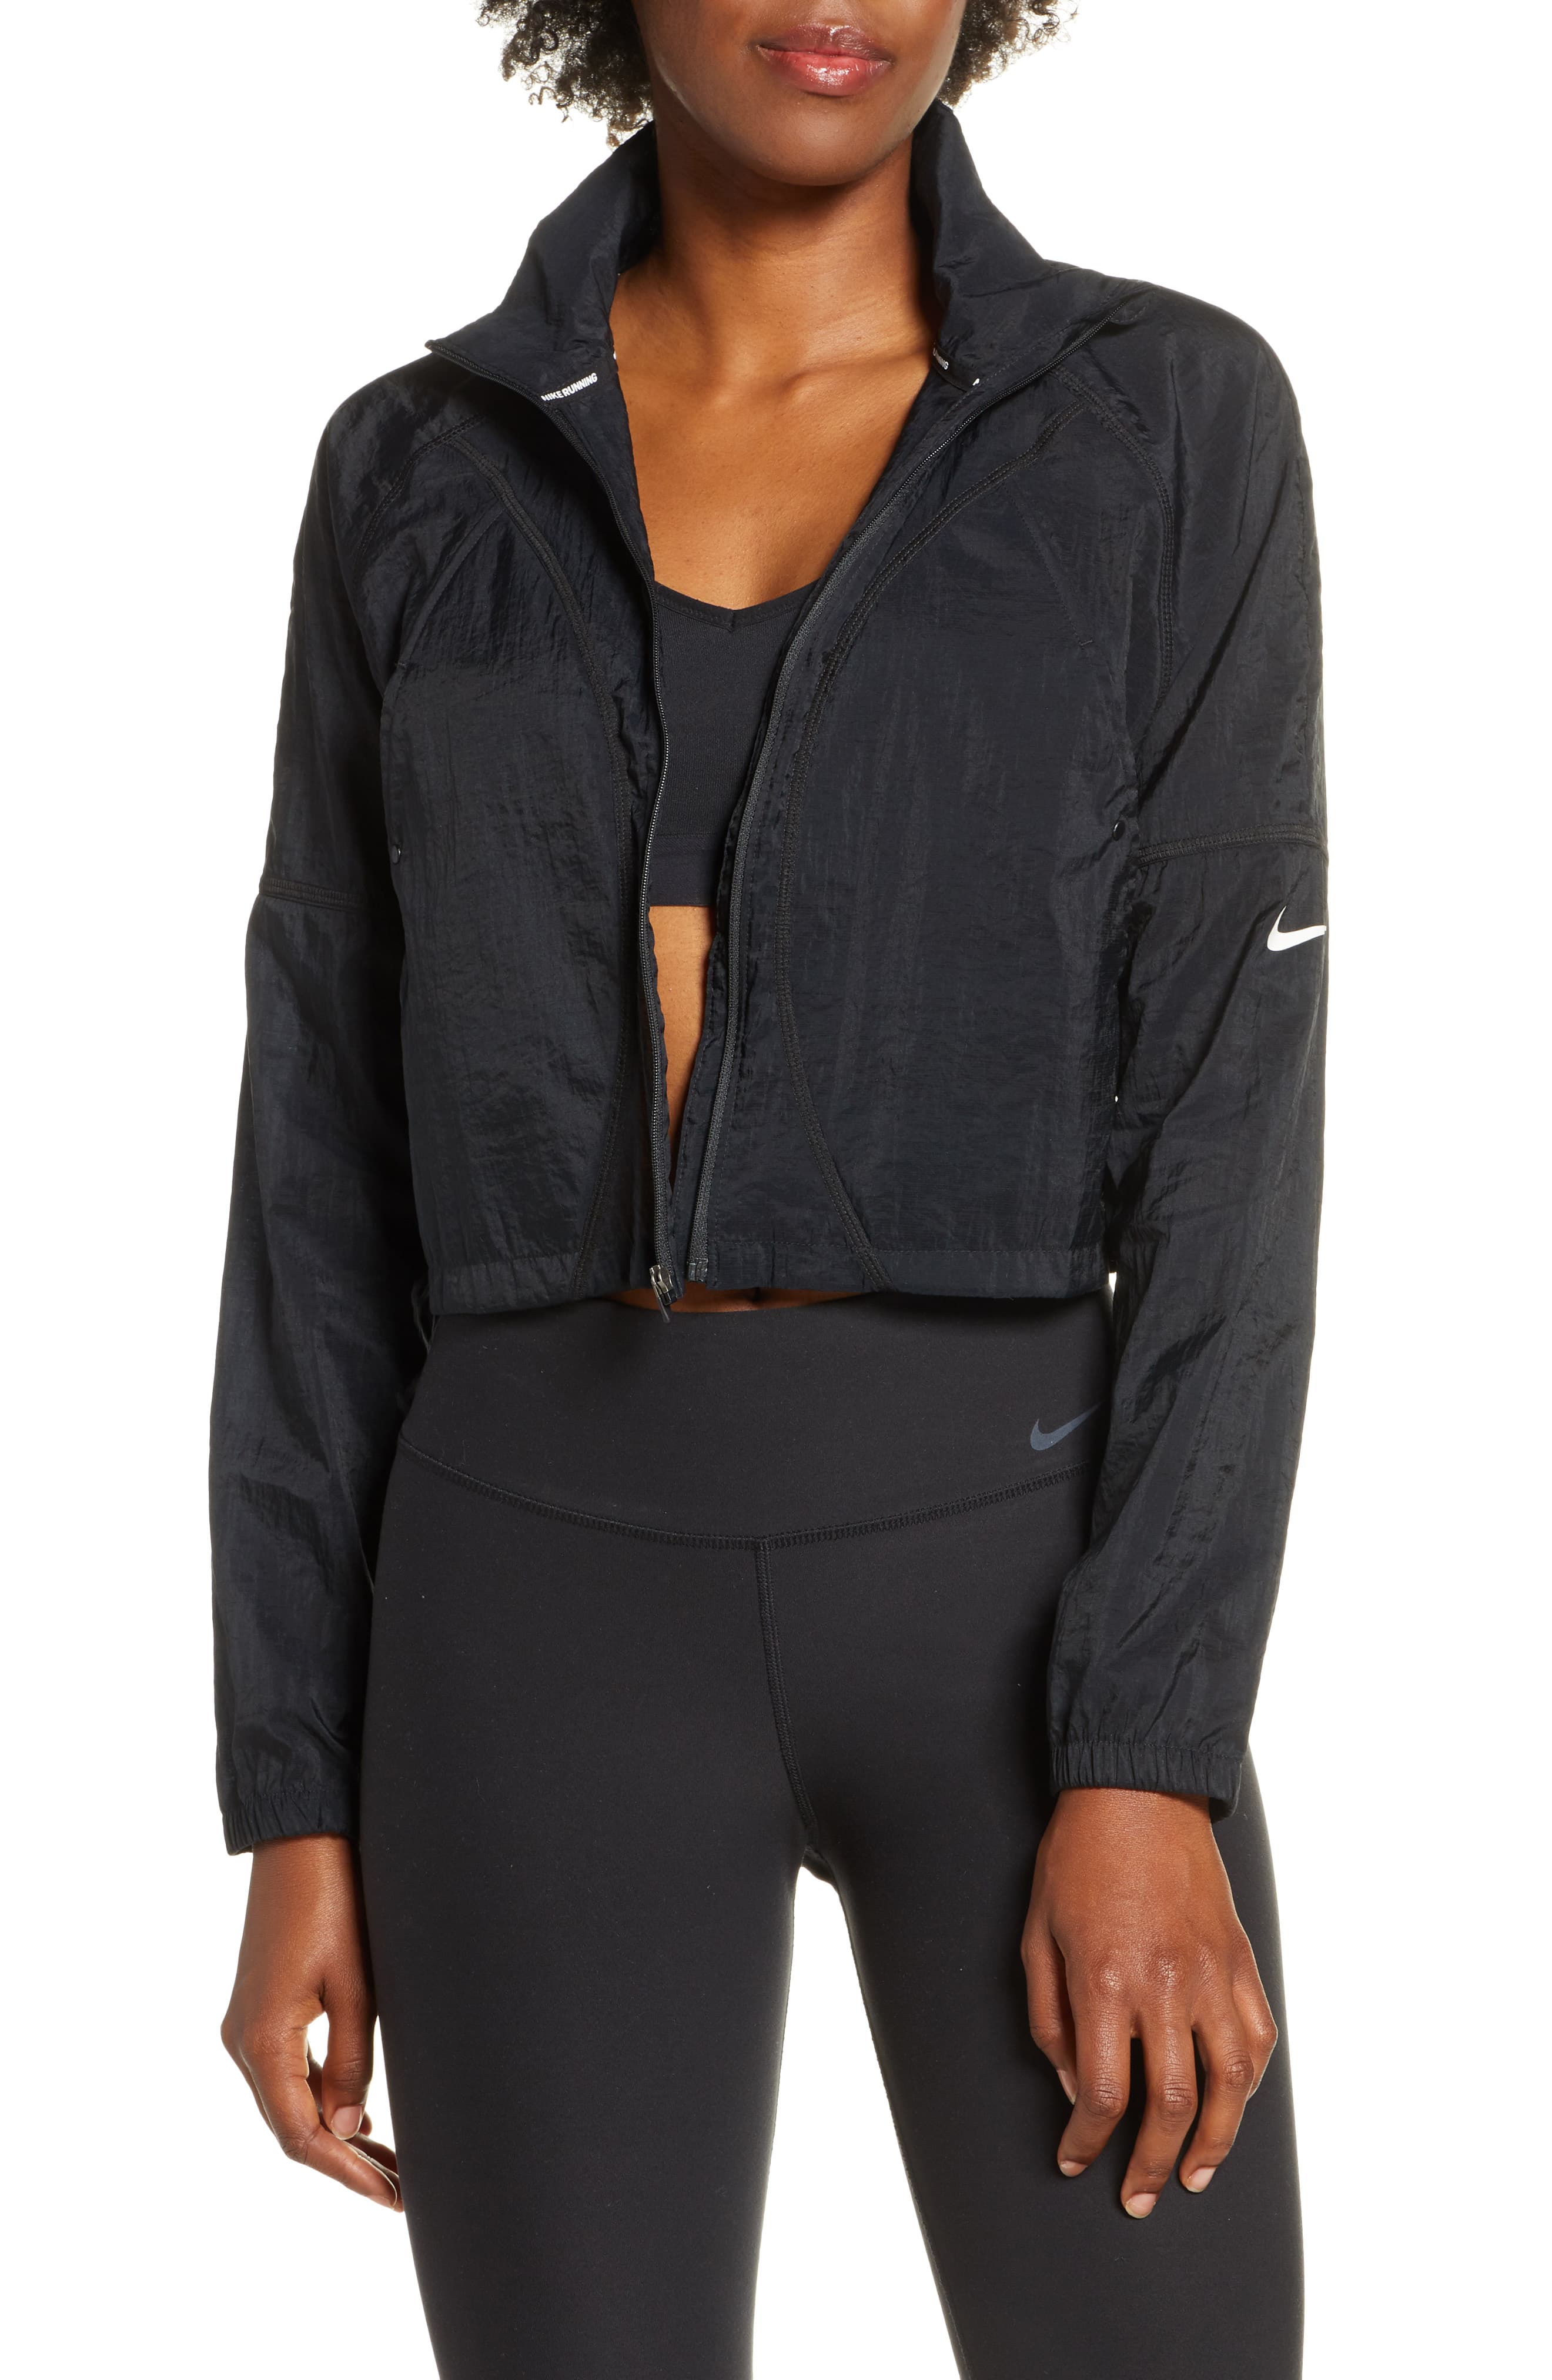 Nike Womens Translucent Cropped Running Jacket Color Black/Phantom